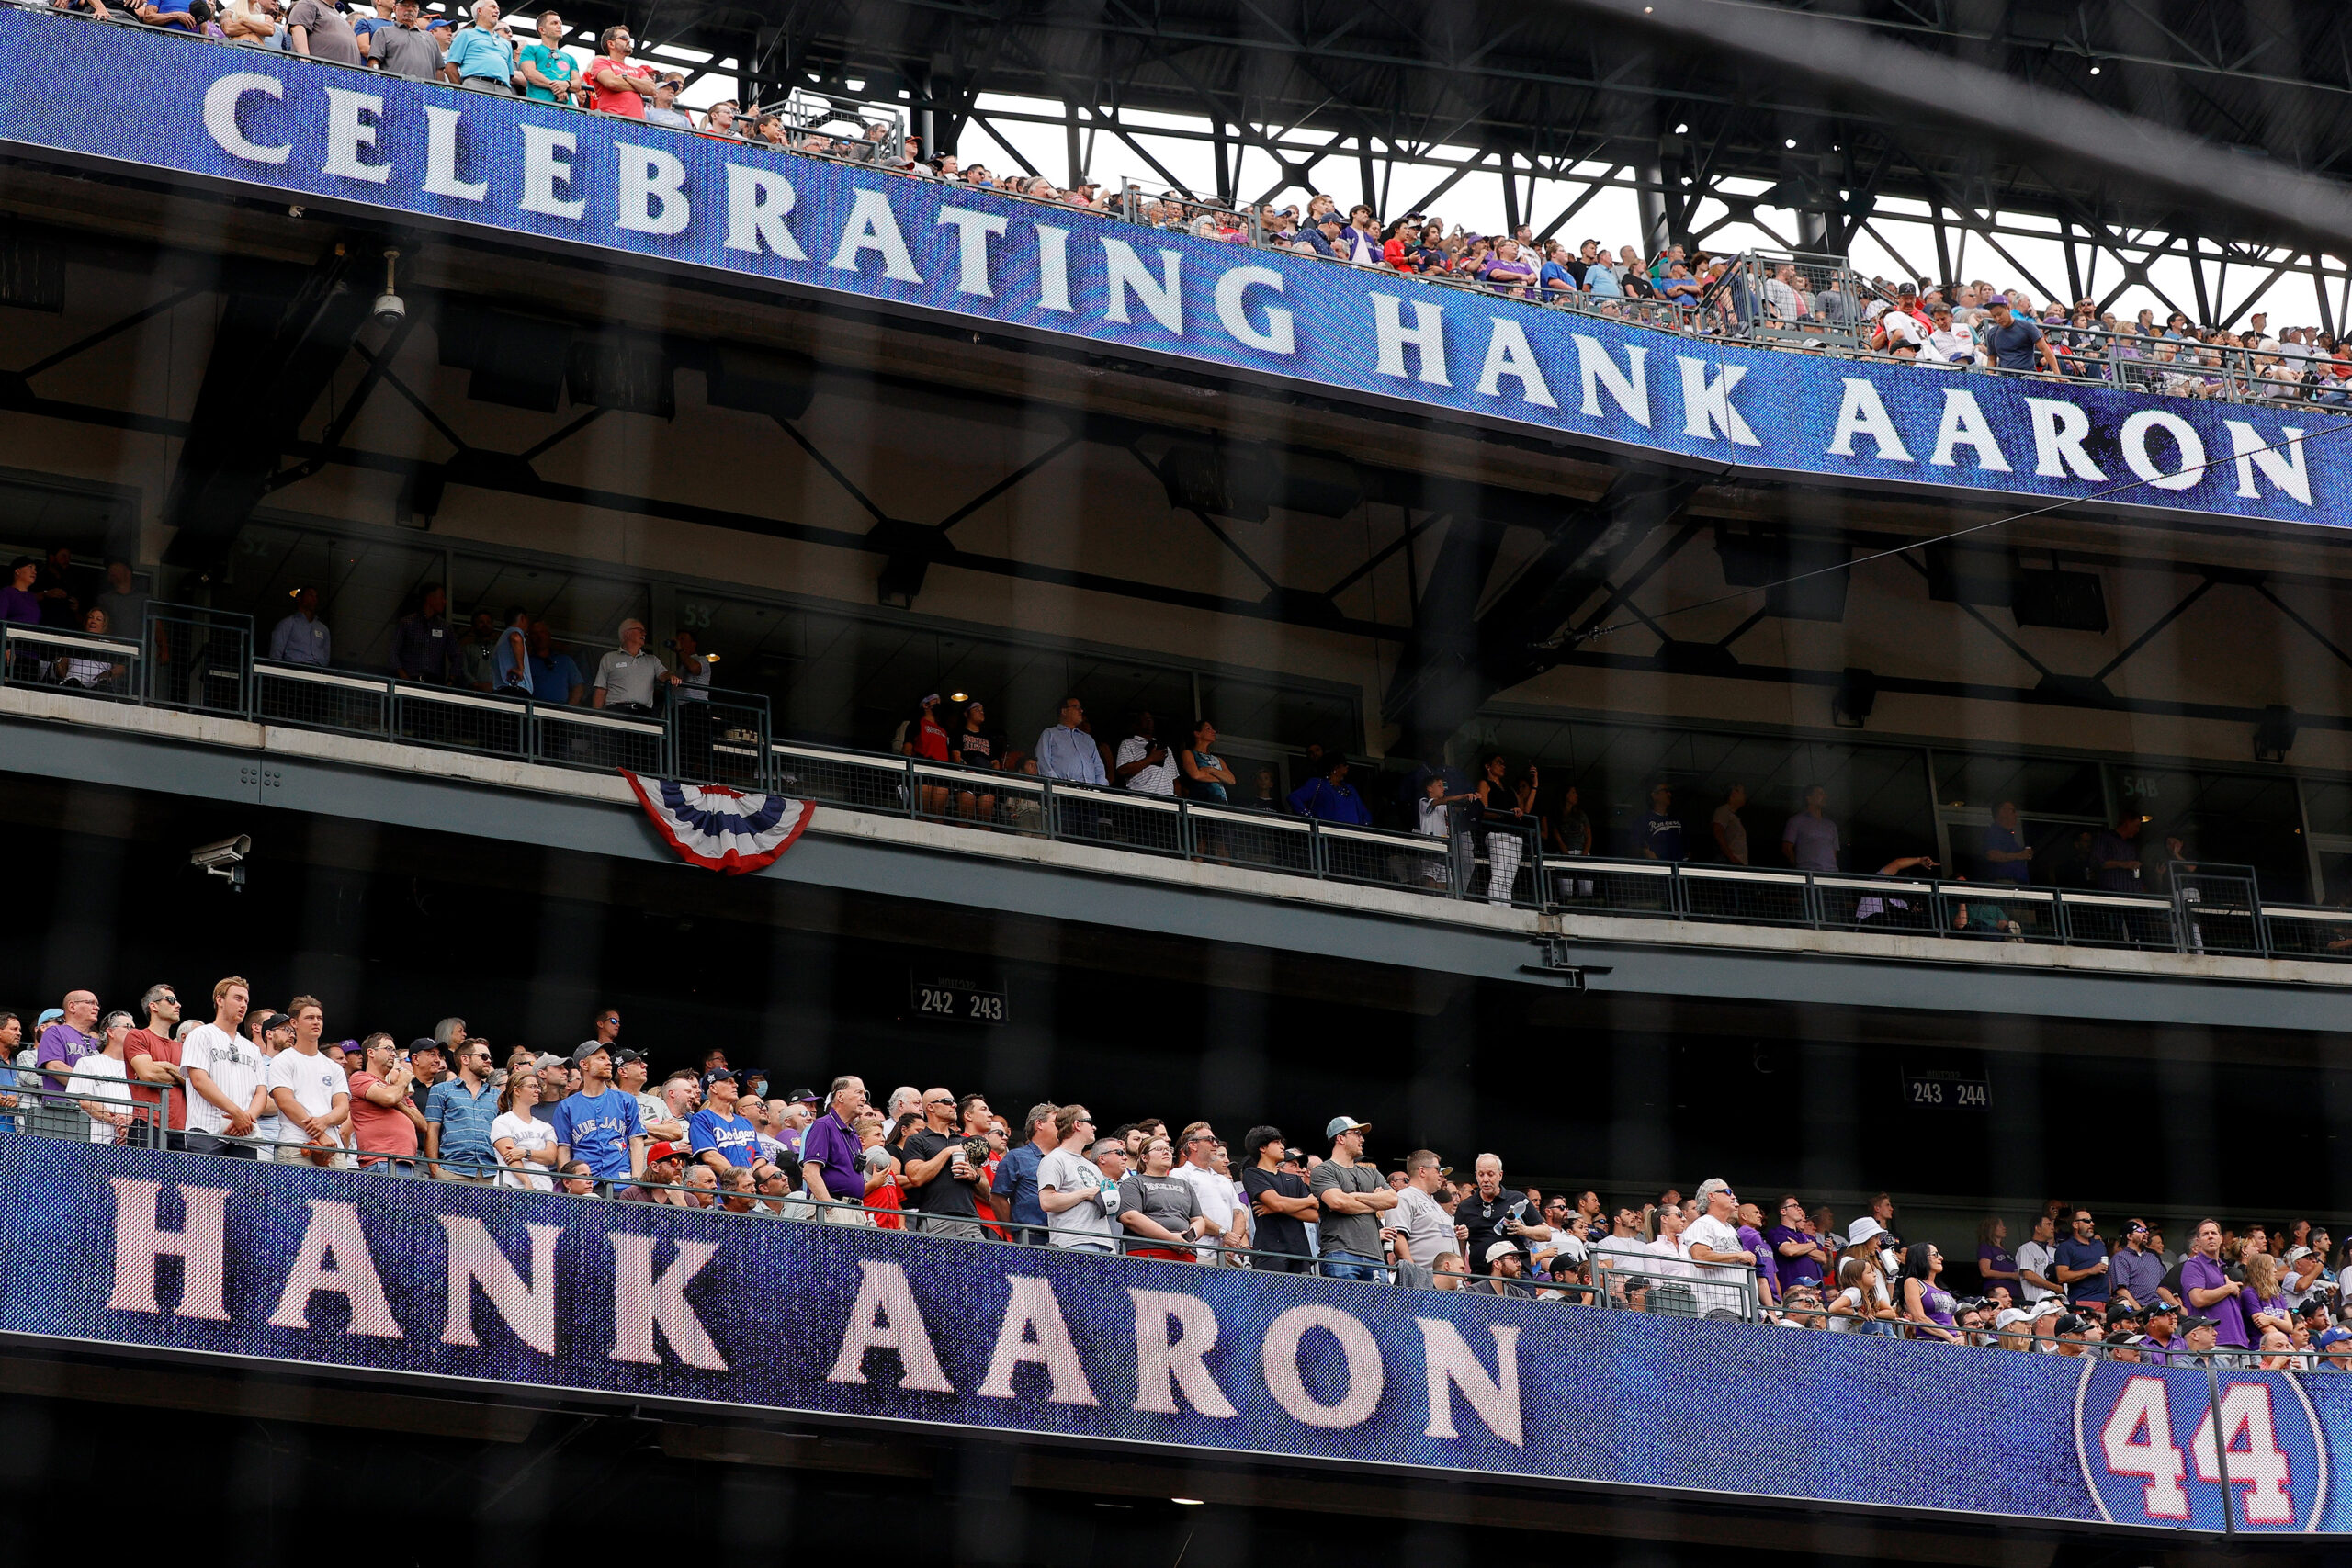 Celebrat5ing Hank Aaron's MLB record home run.